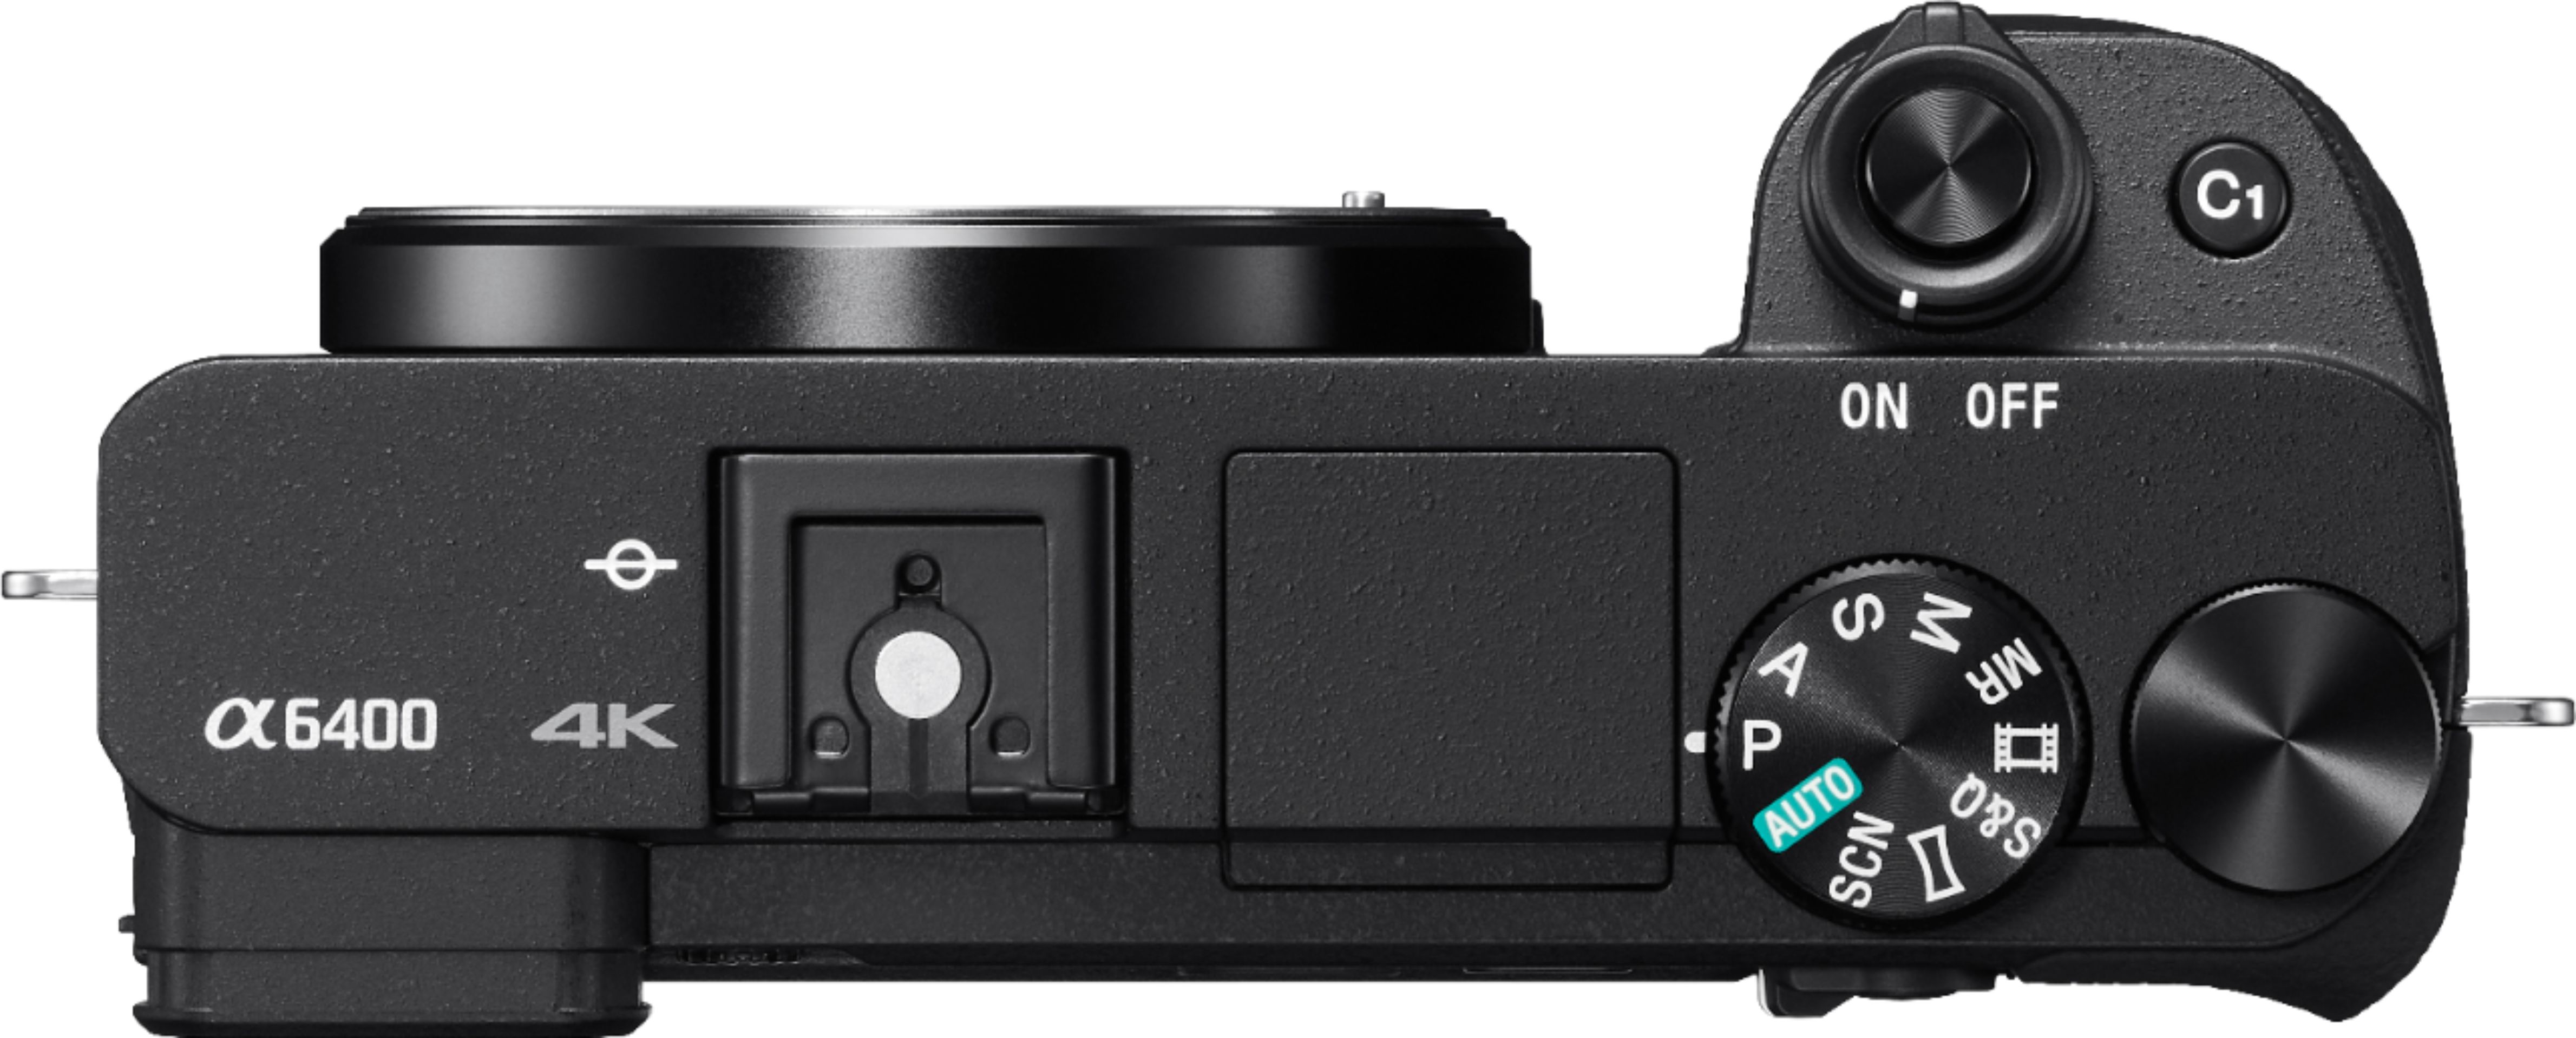 Sony Alpha a6400 Mirrorless Black Only) Camera - ILCE-6400/B Best (Body Buy